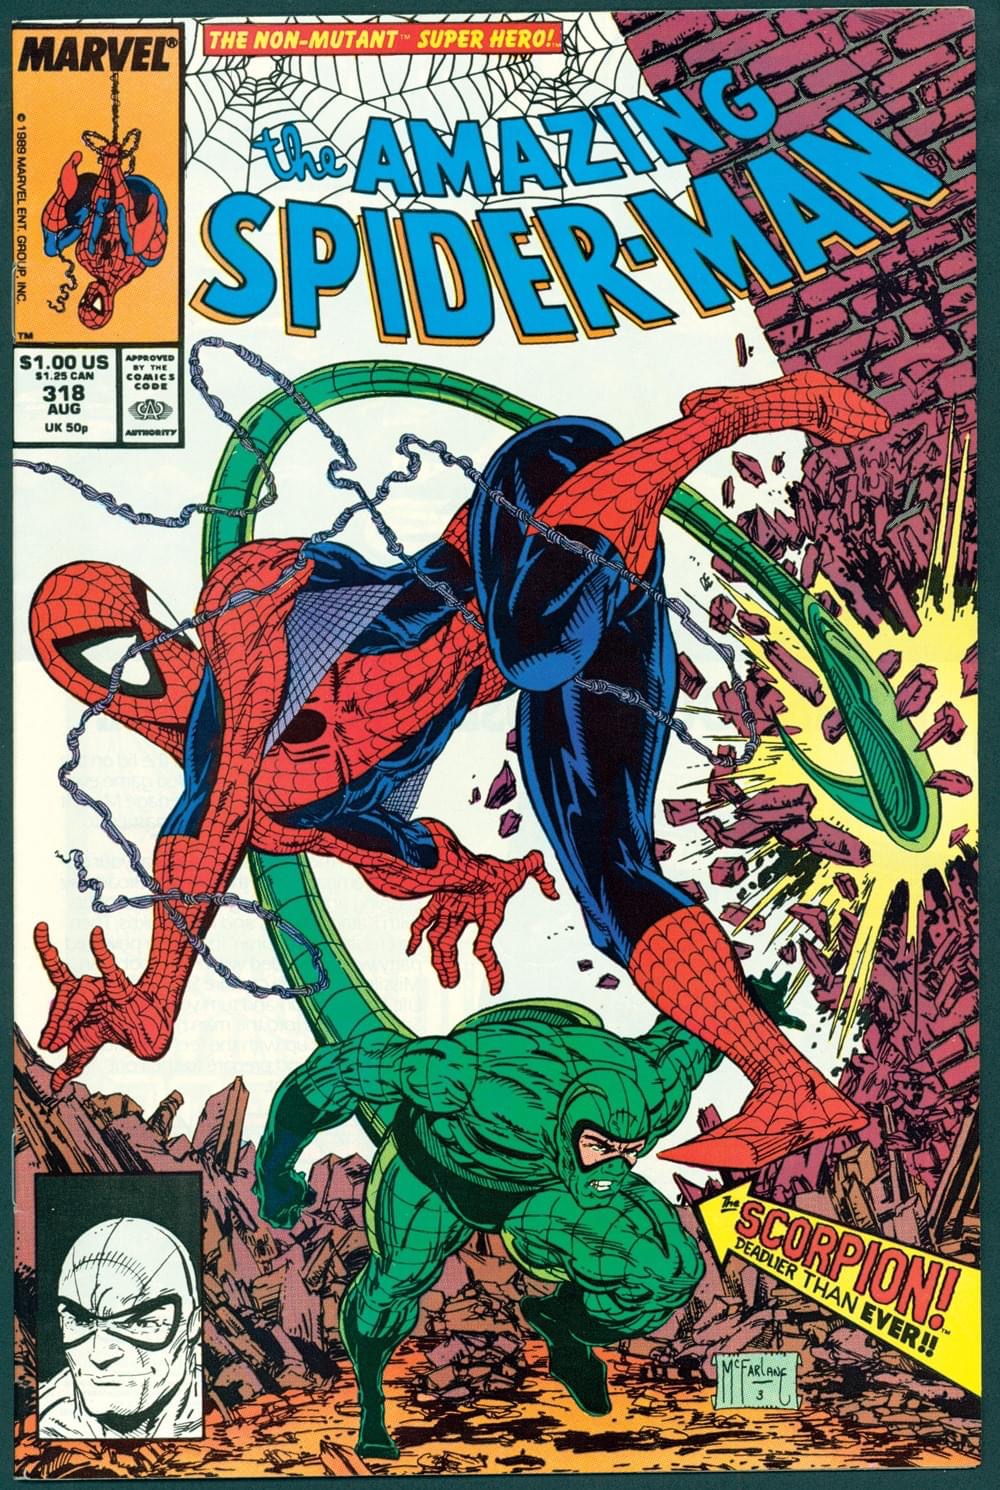 amazing spider man 318 - the Amaztage Spidermane The NonMutant Marvel 51.00 Us 318 Scorpion! Than Ever!